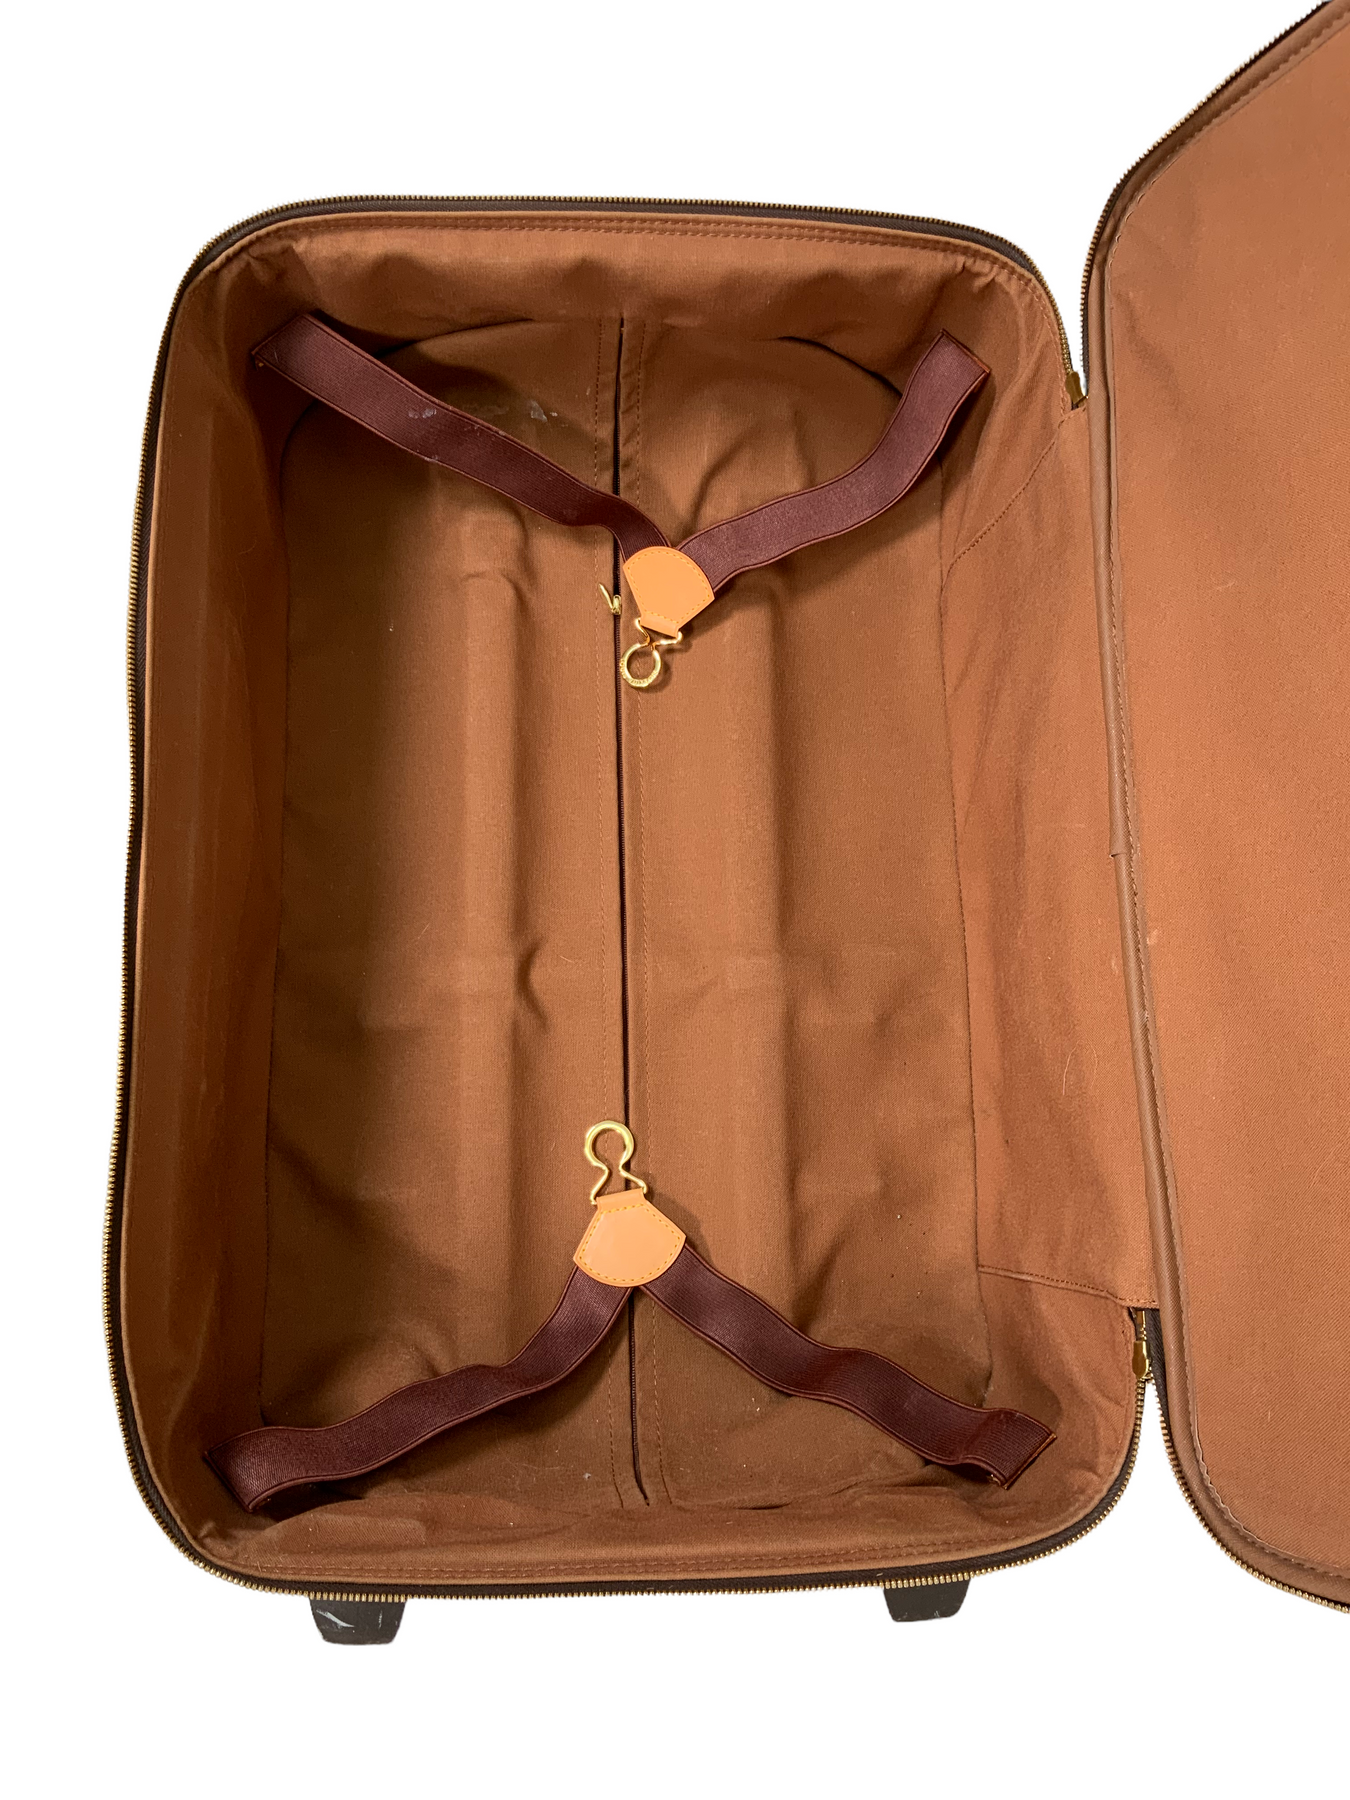 Pegase leather travel bag